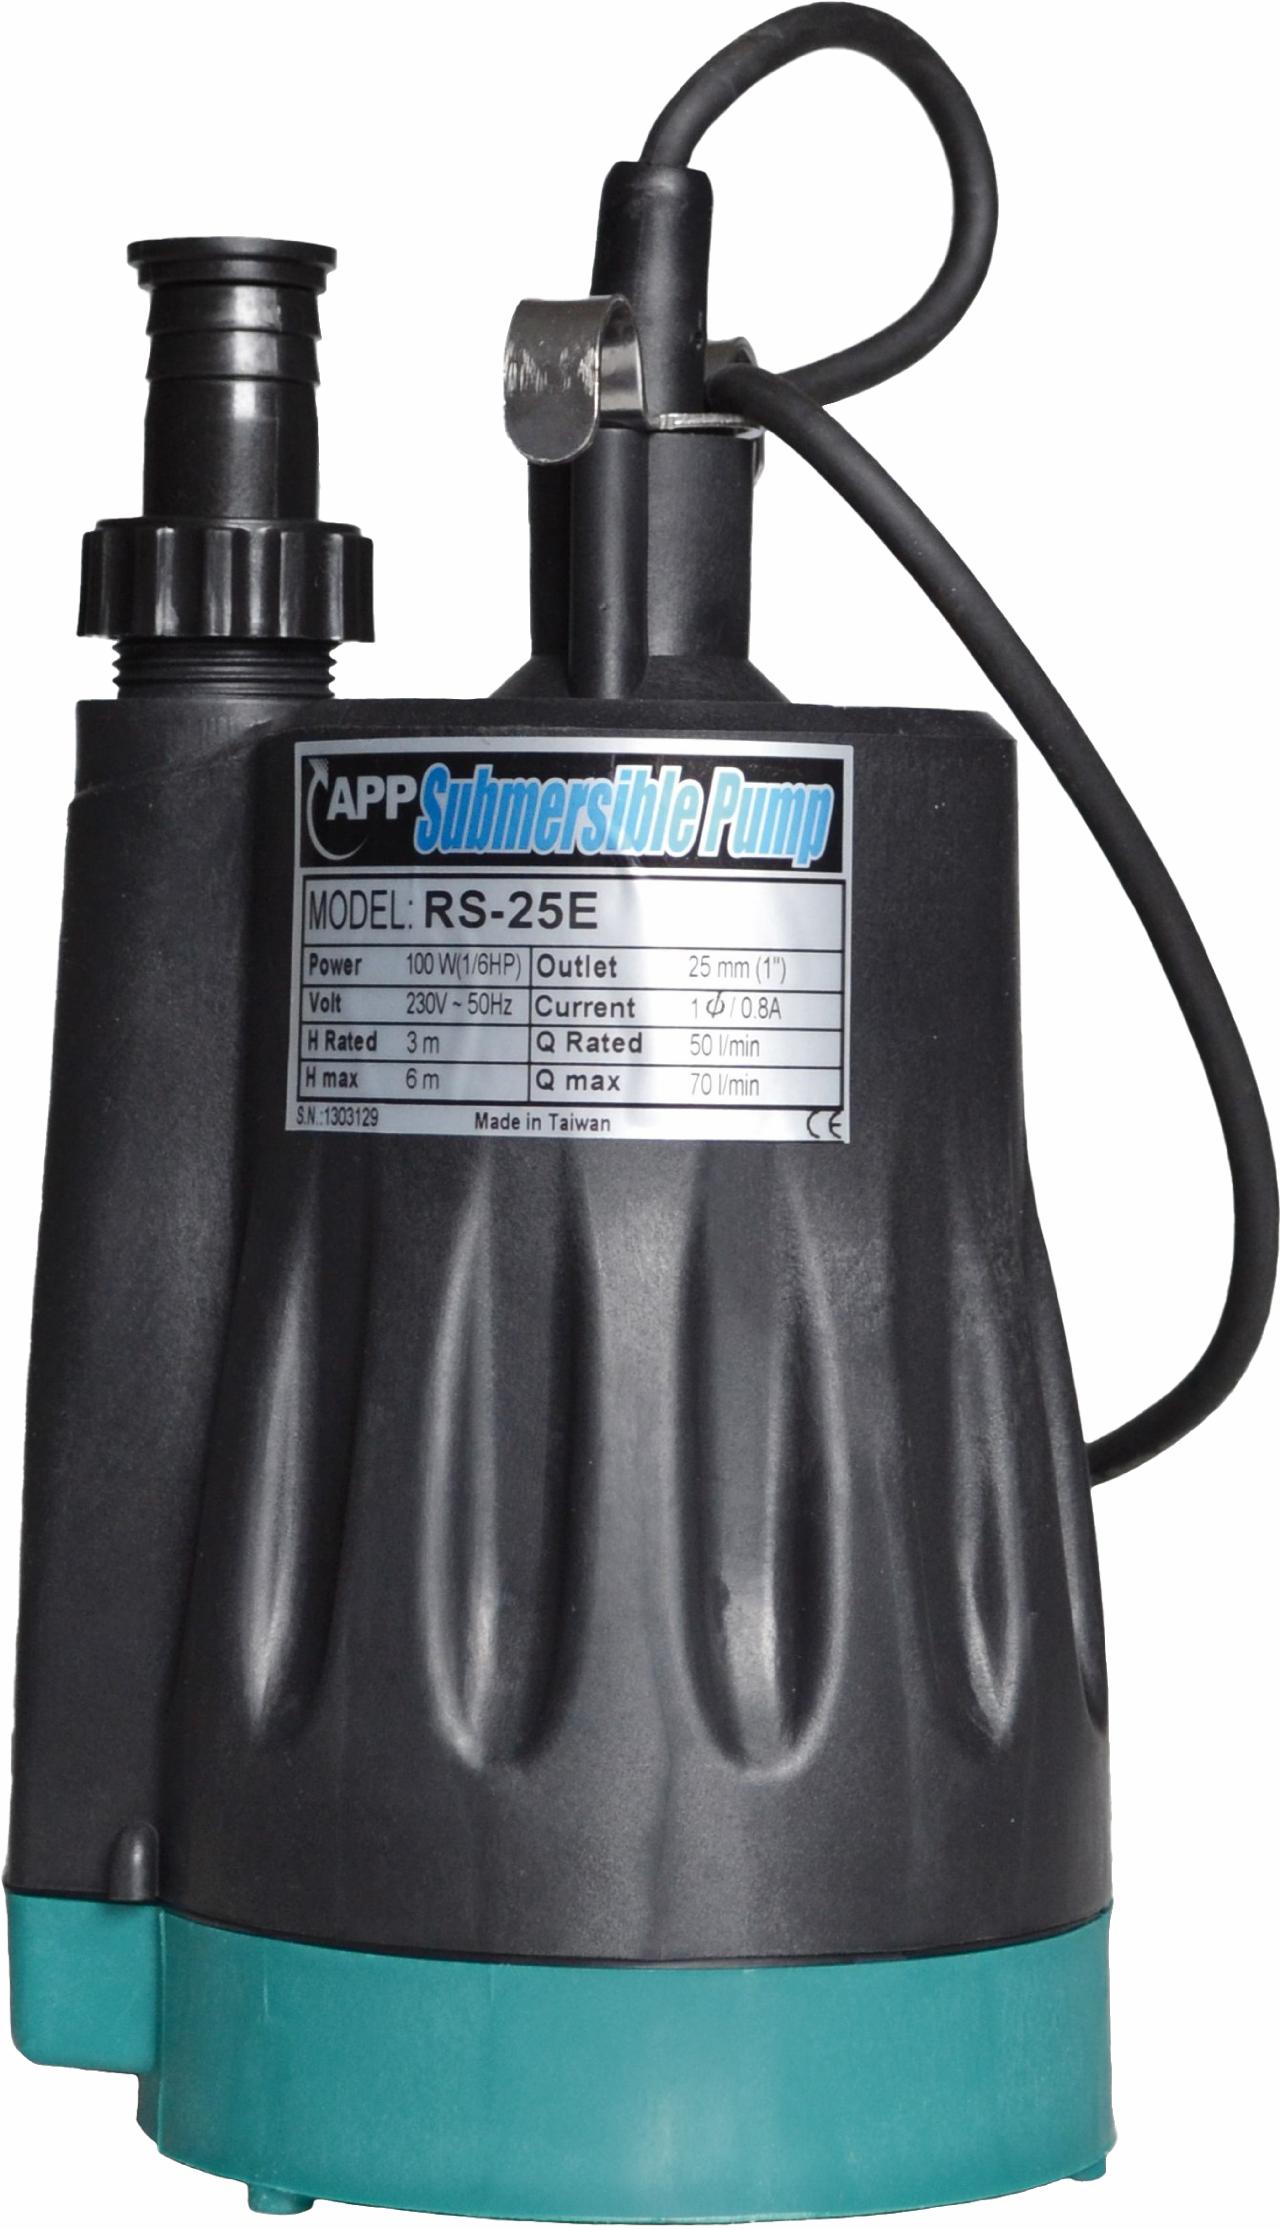 Submersible pump RS25E